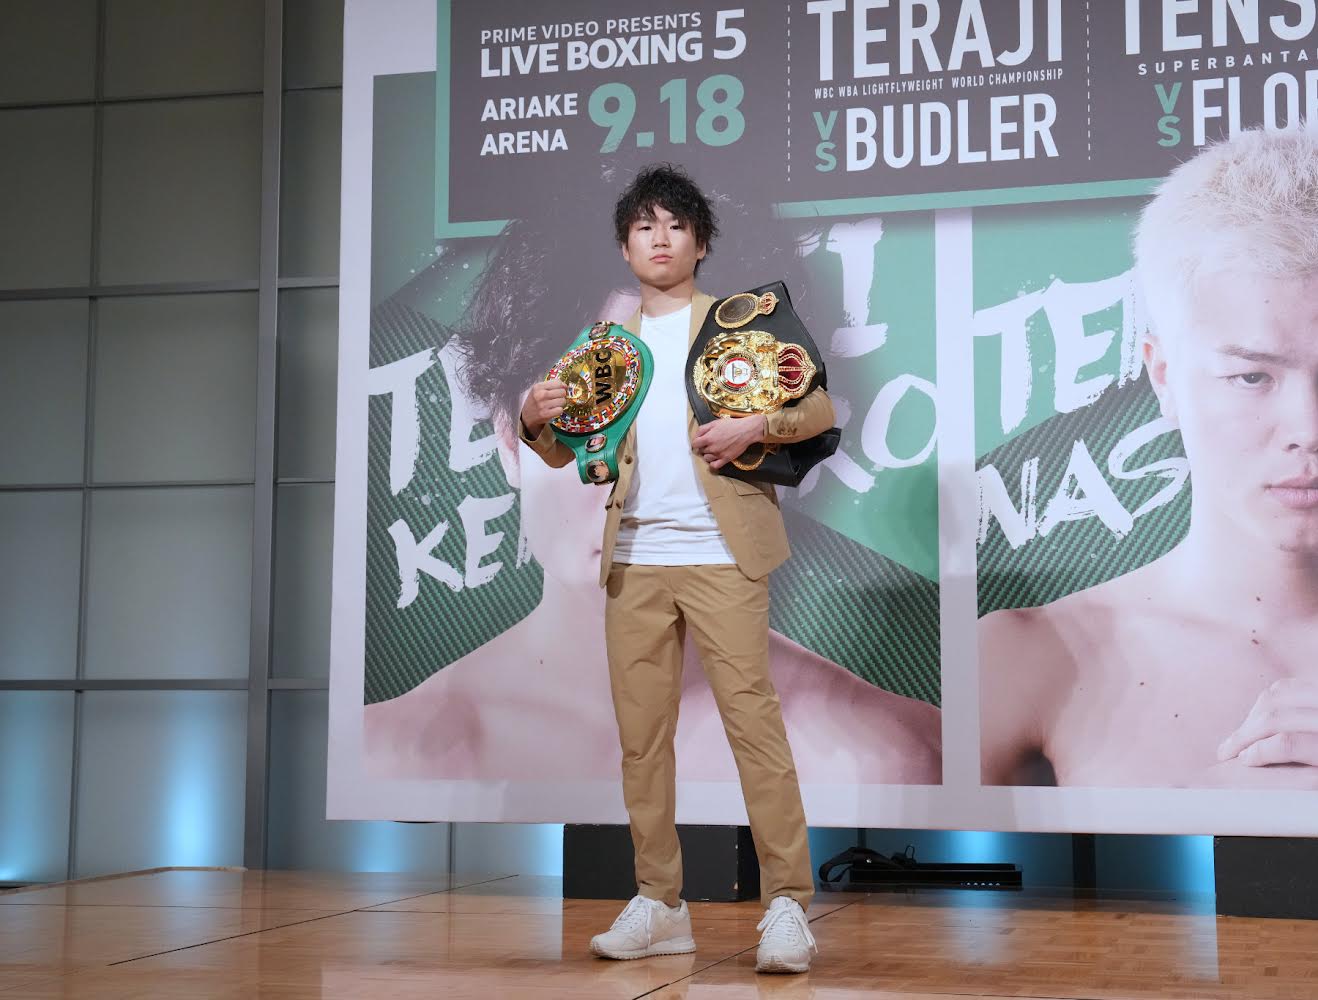 Kenshiro Teraji vs. Hekkie Budler: Live Stream, Betting Odds & Fight Card